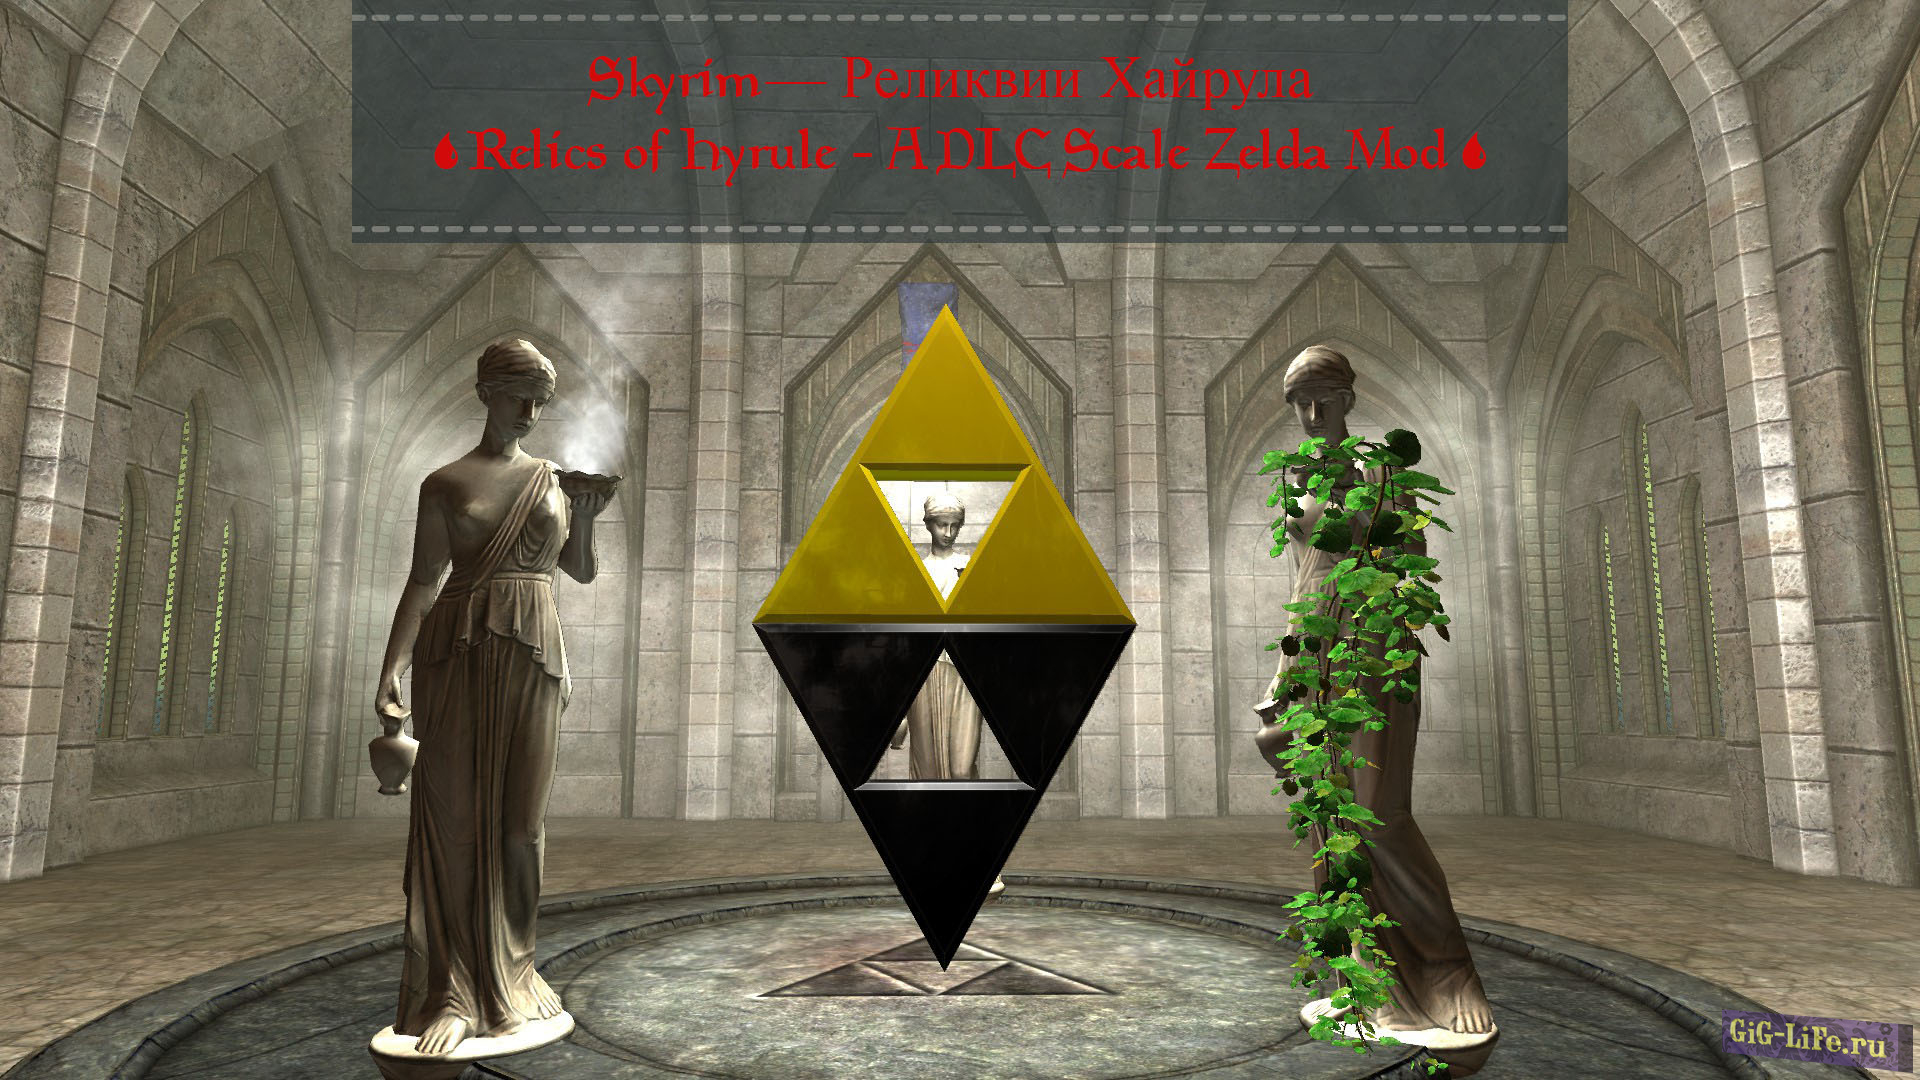 Skyrim — Реликвии Хайрула | Relics of Hyrule - A DLC Scale Zelda Mod